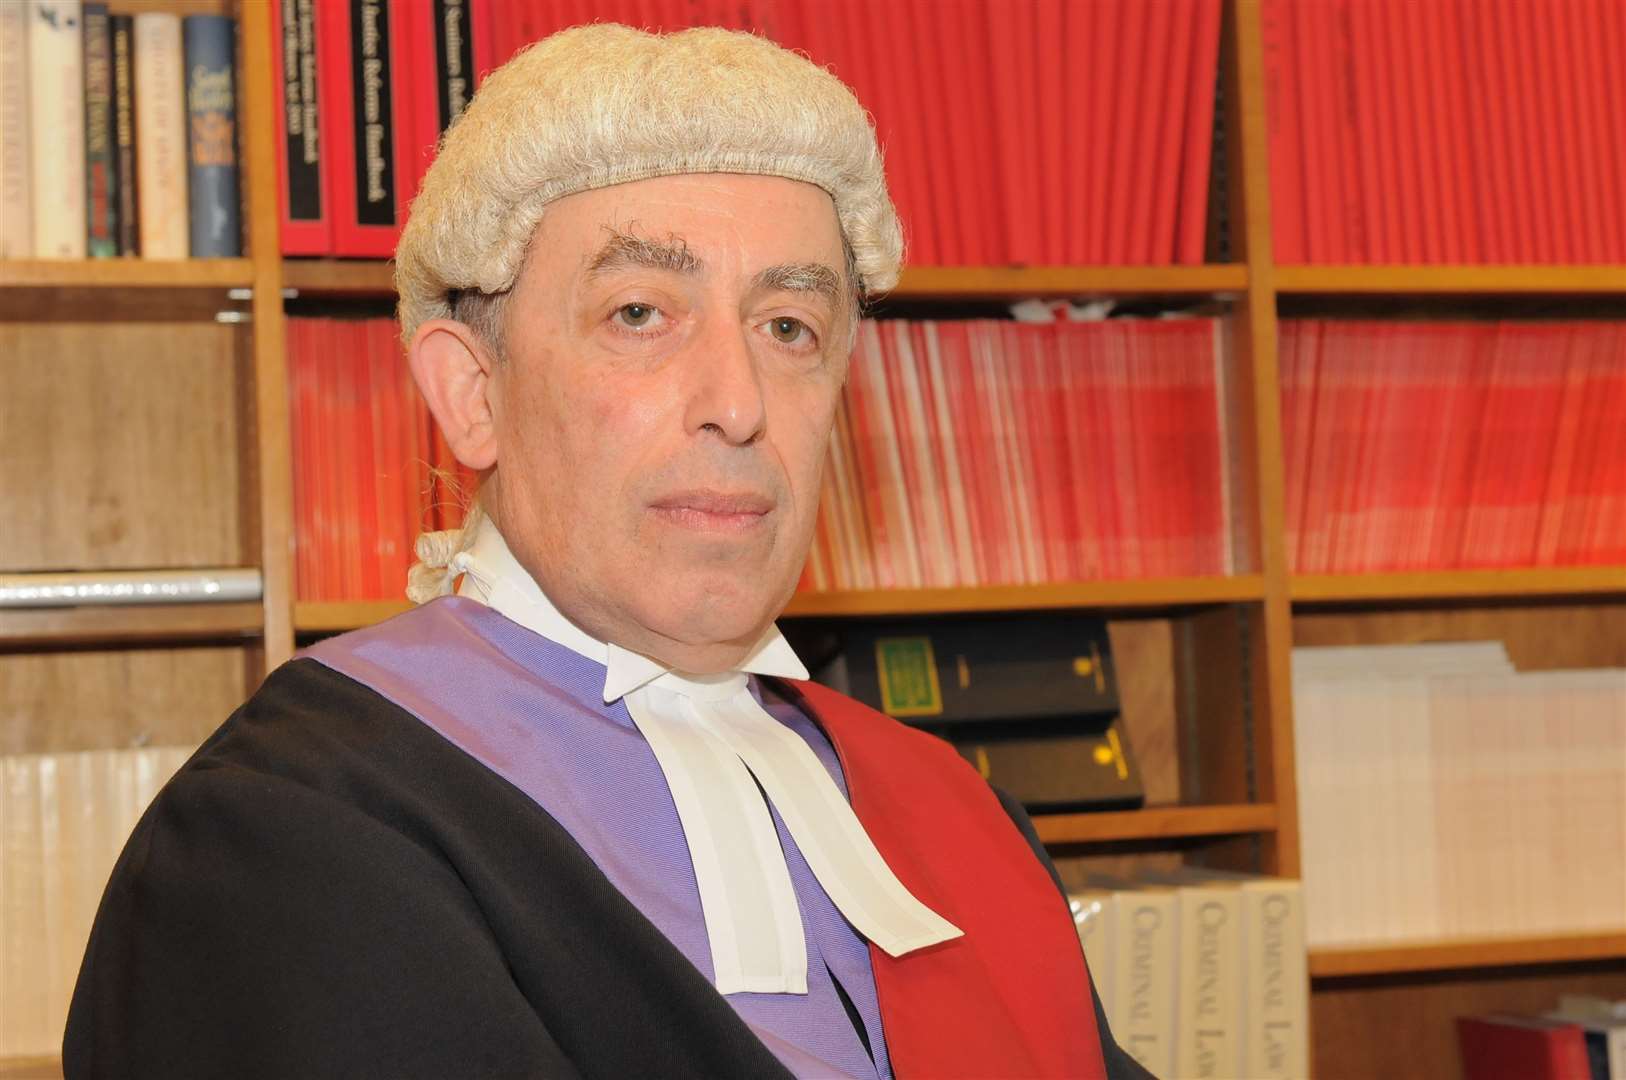 Judge Philip Statman